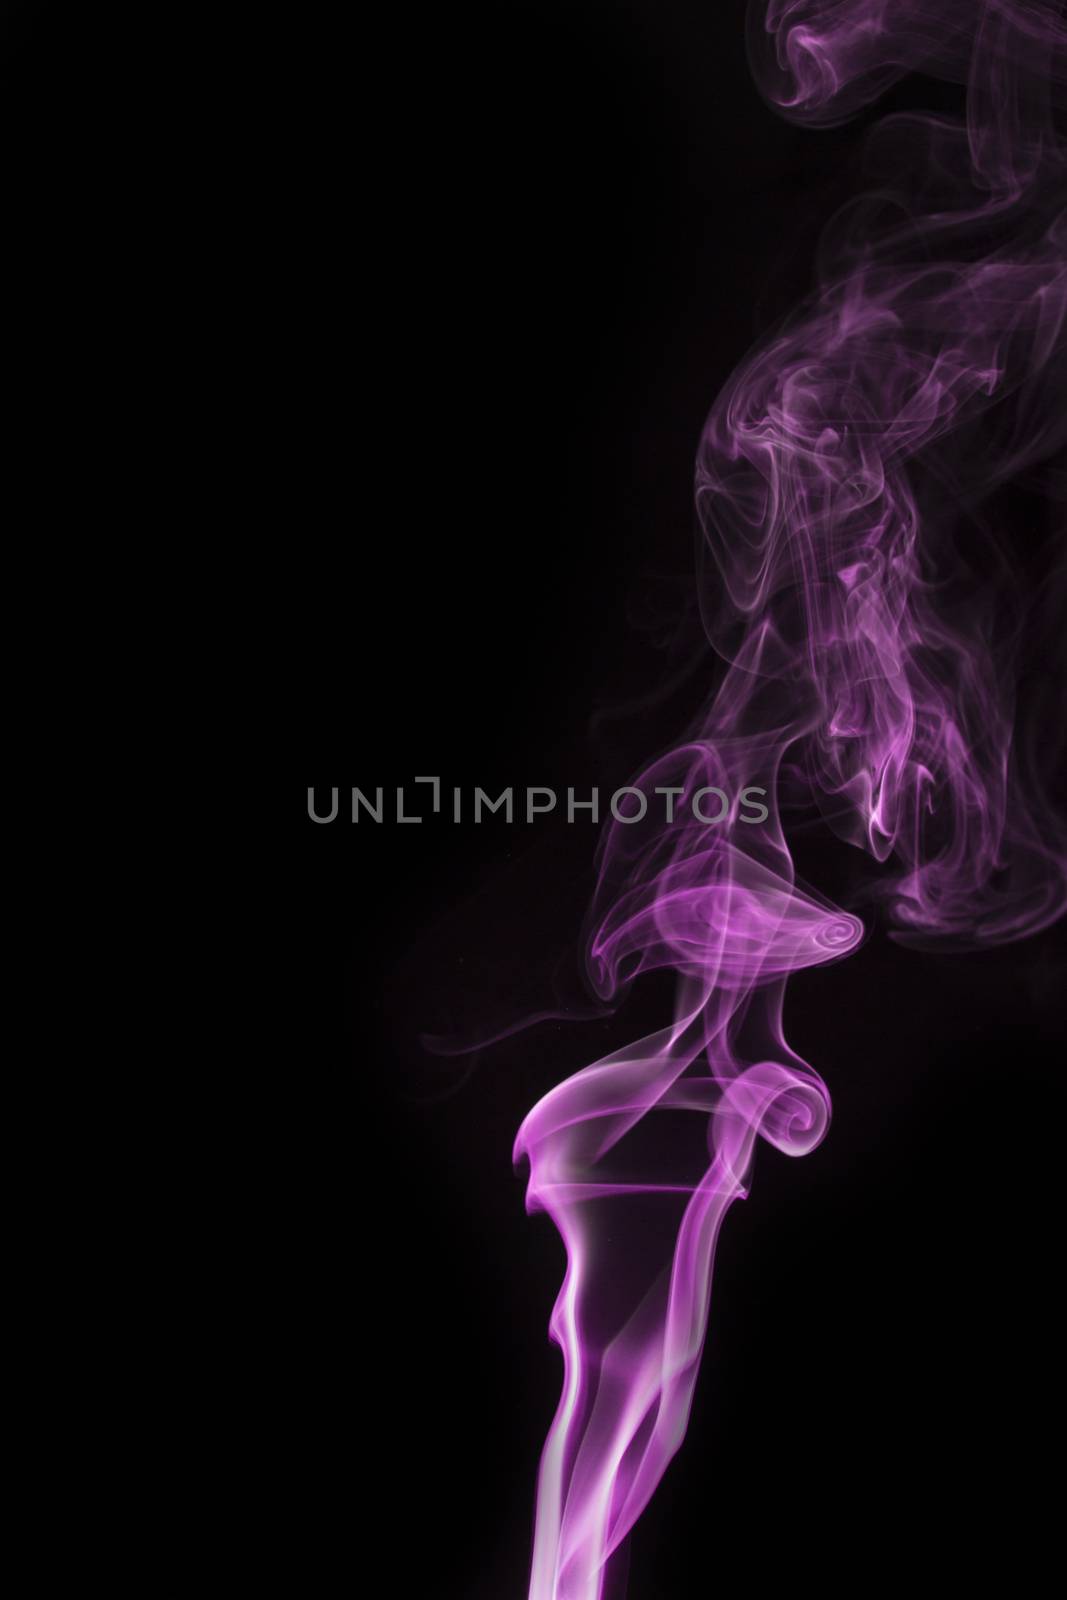 abstract background, colorful smoke of Joss stick